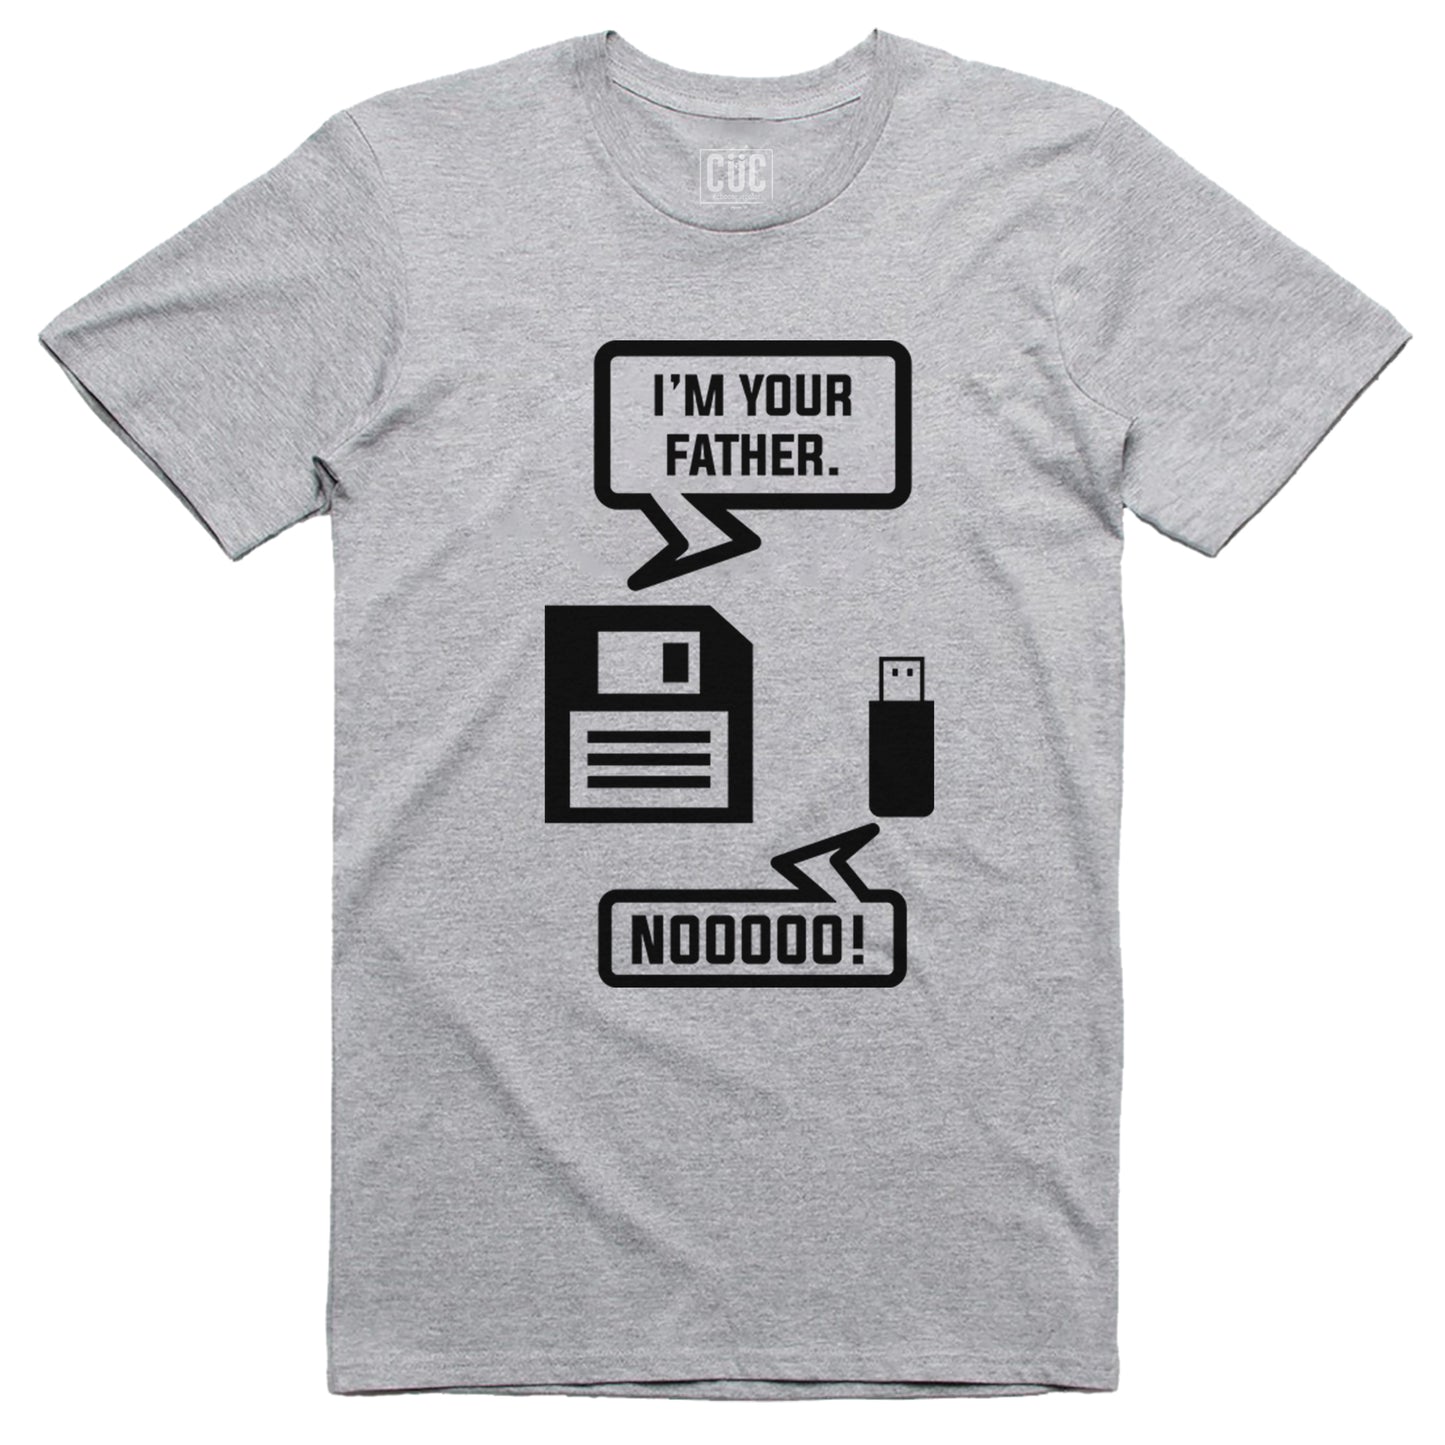 CUC T-Shirt I m Your Father - Nerd - Otaku - Floppy&USB  #chooseurcolor - CUC chooseurcolor